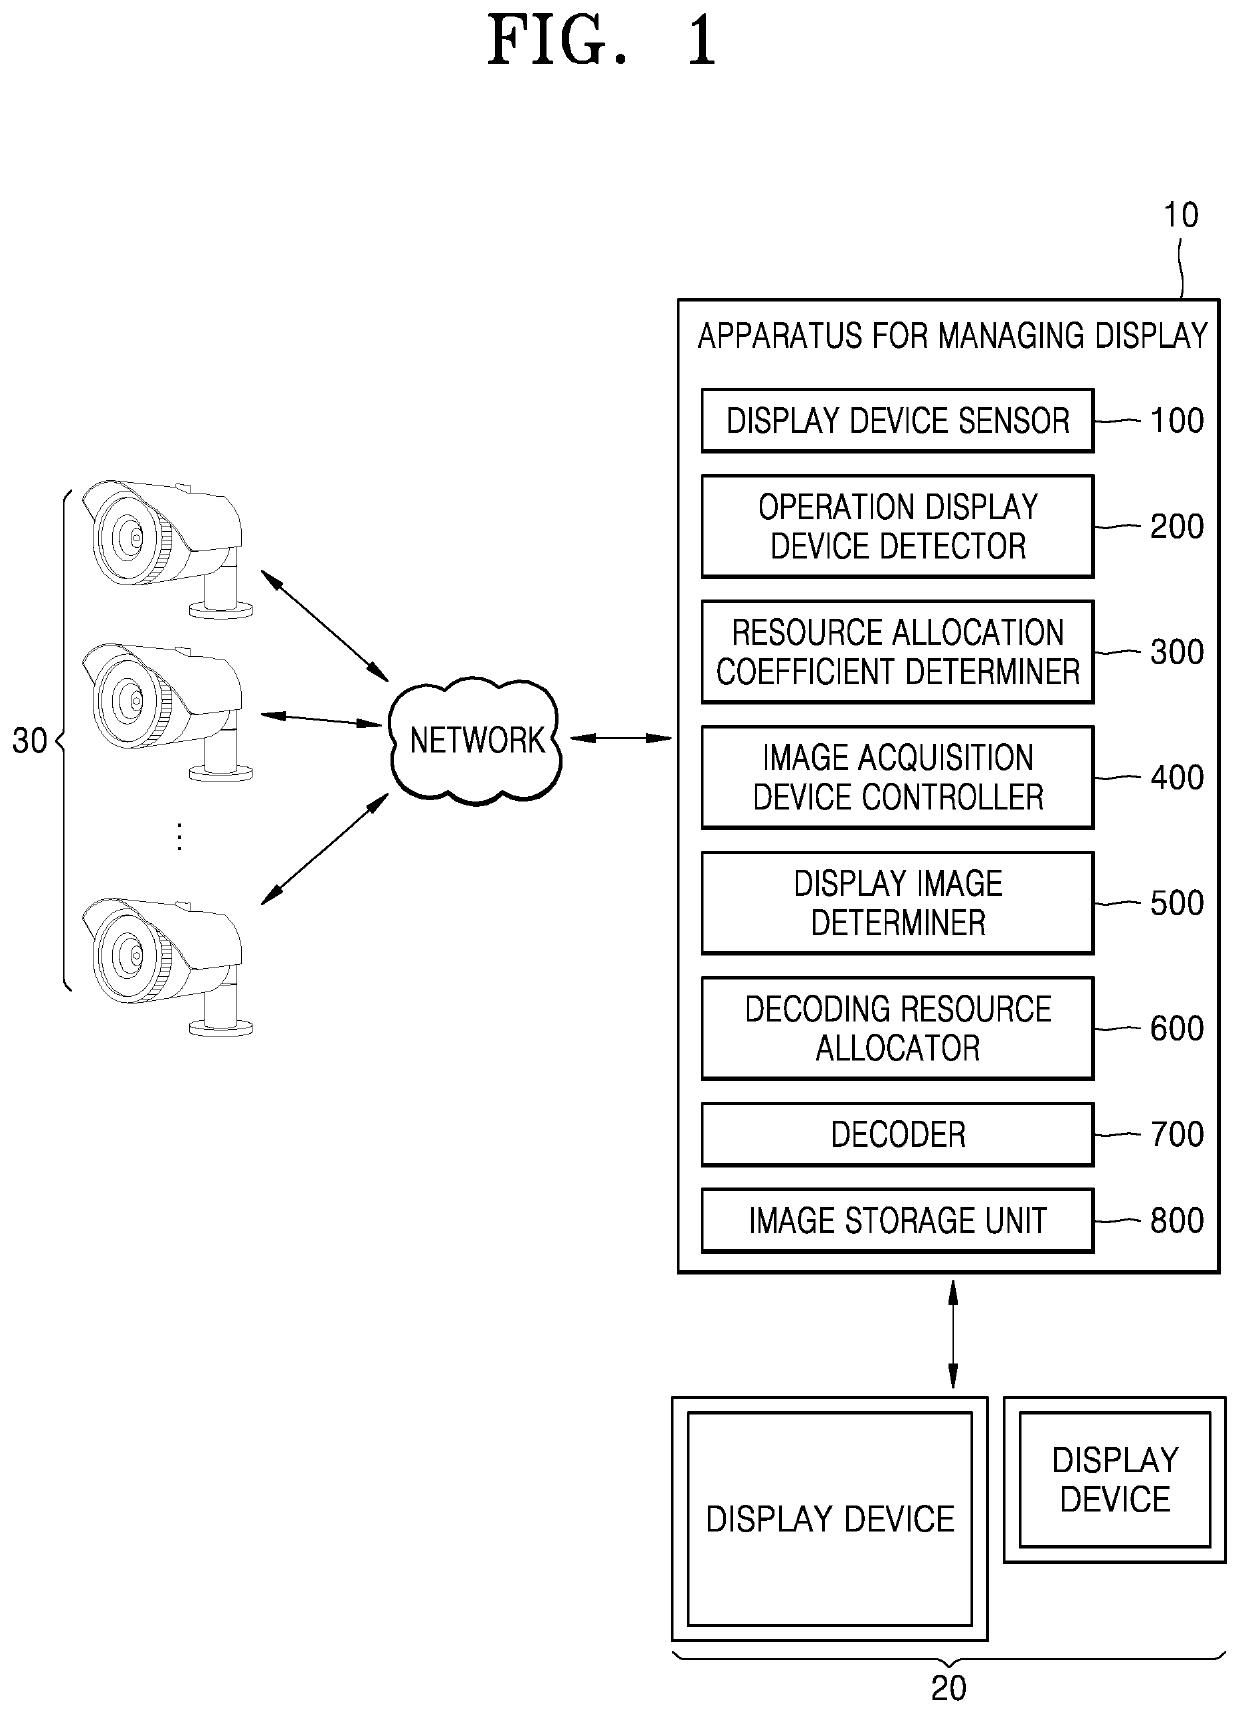 Apparatus and method of managing display